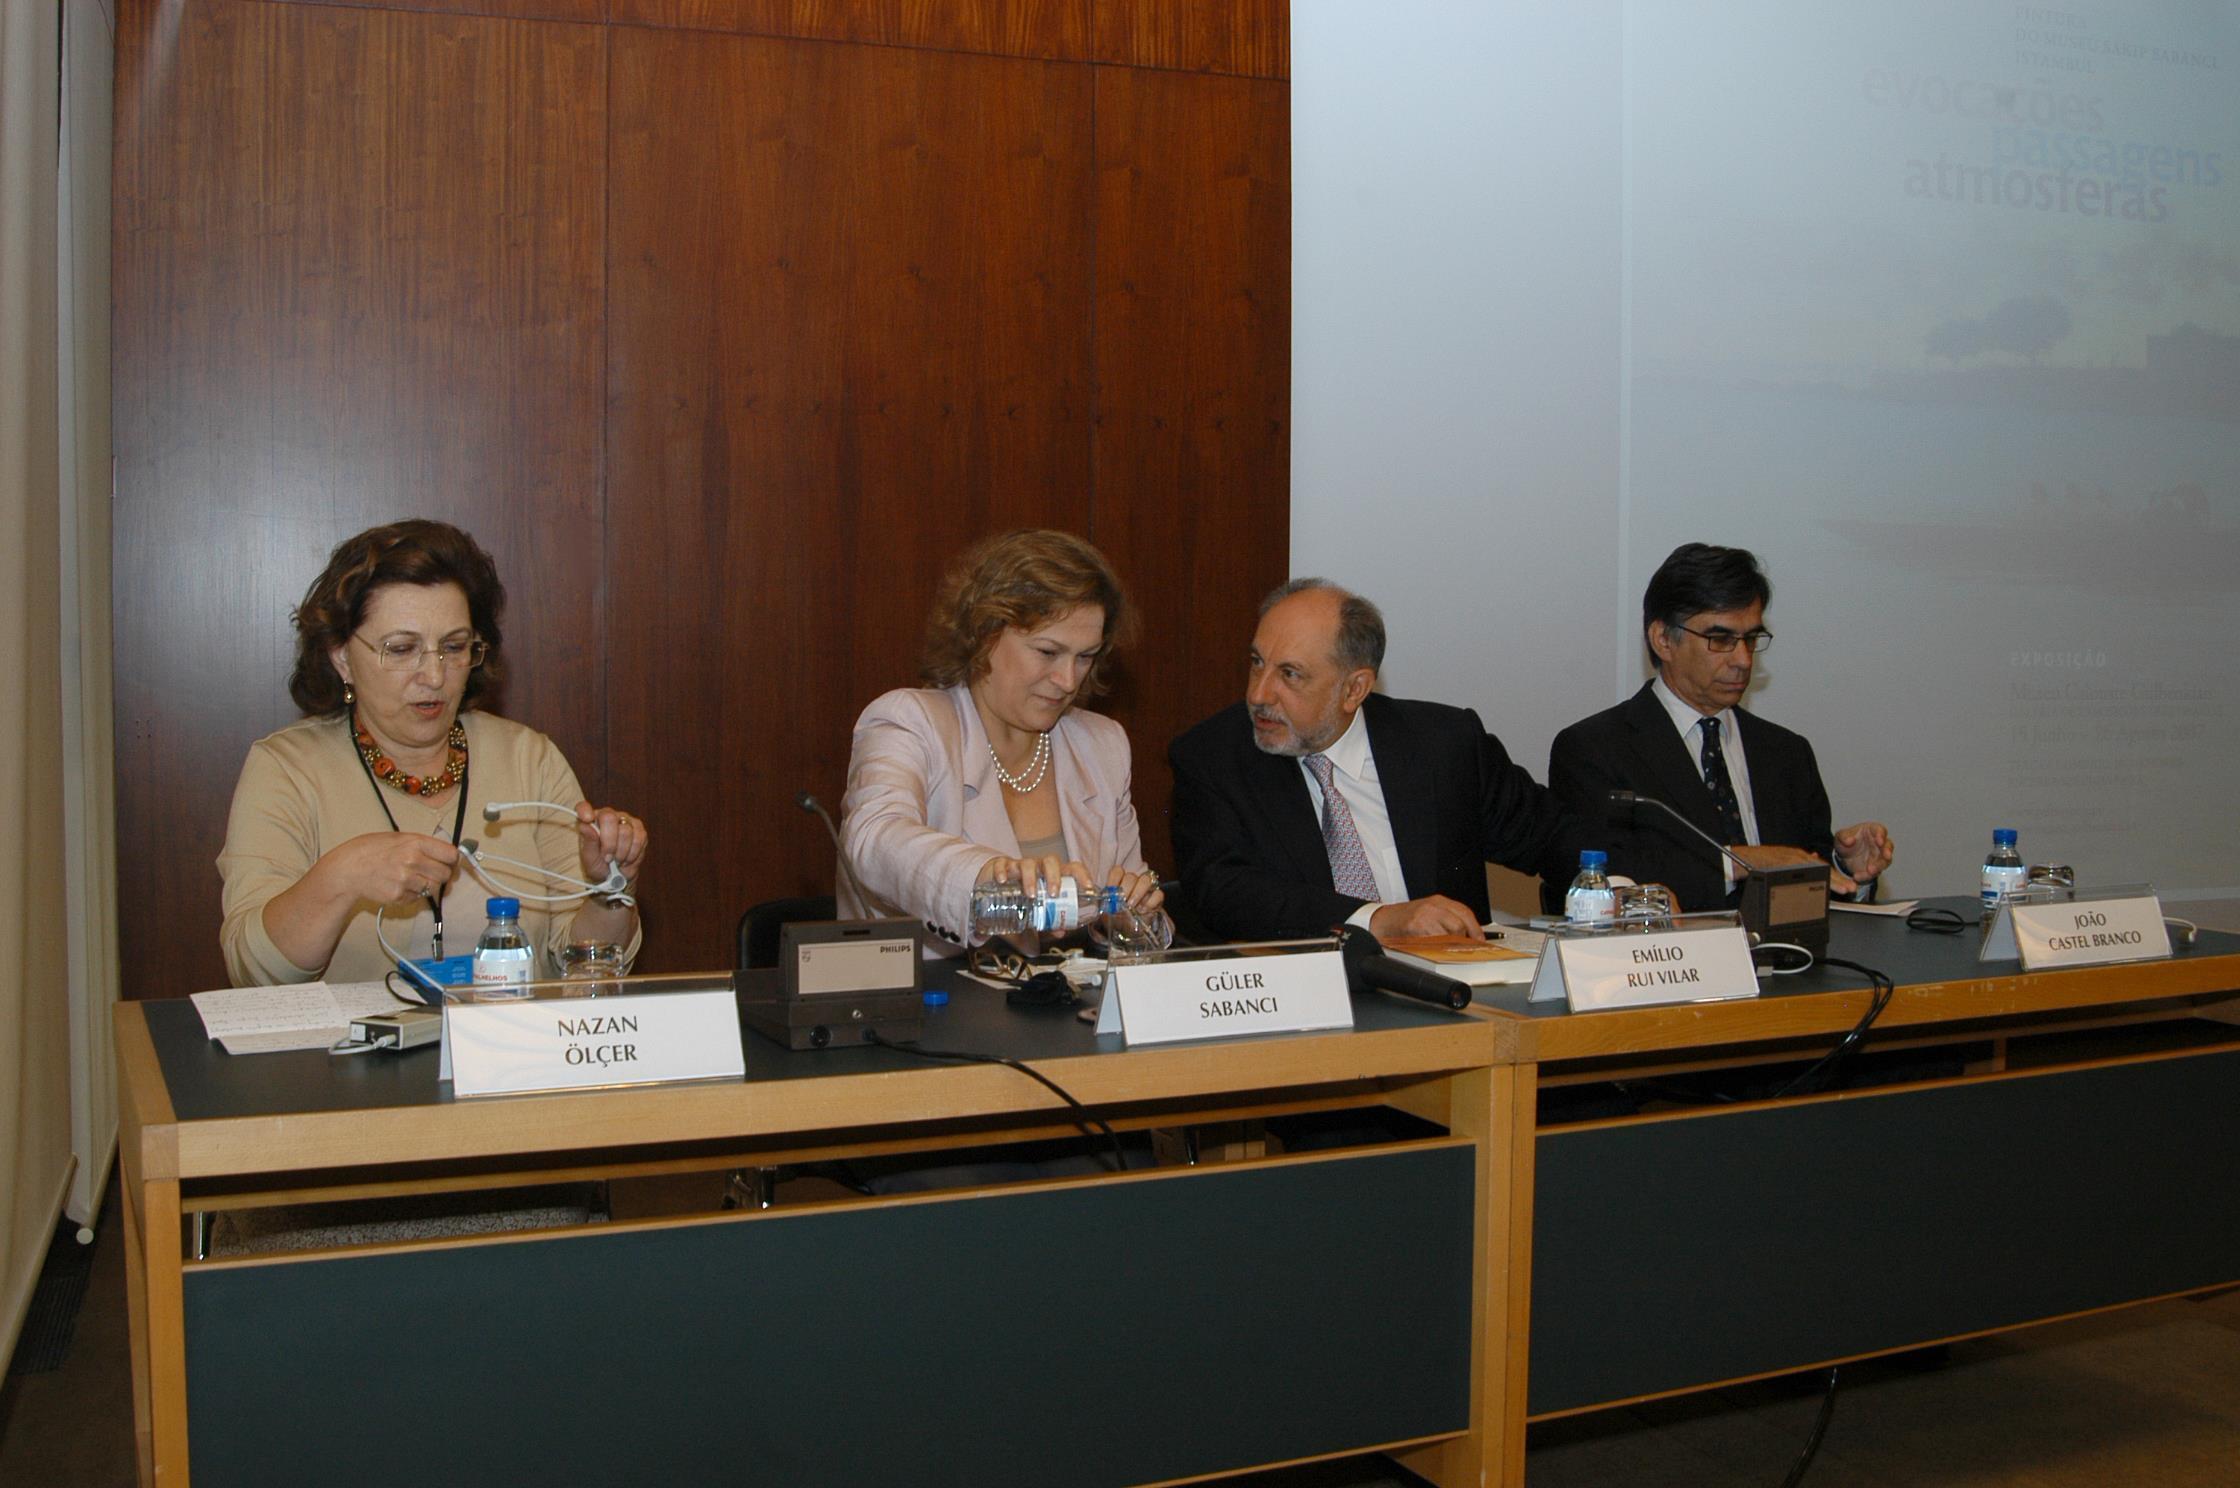 Conferência de imprensa. Nazan Ölçer, Güler Sabanci, Emílio Rui Vilar e João Castel-Branco Pereira